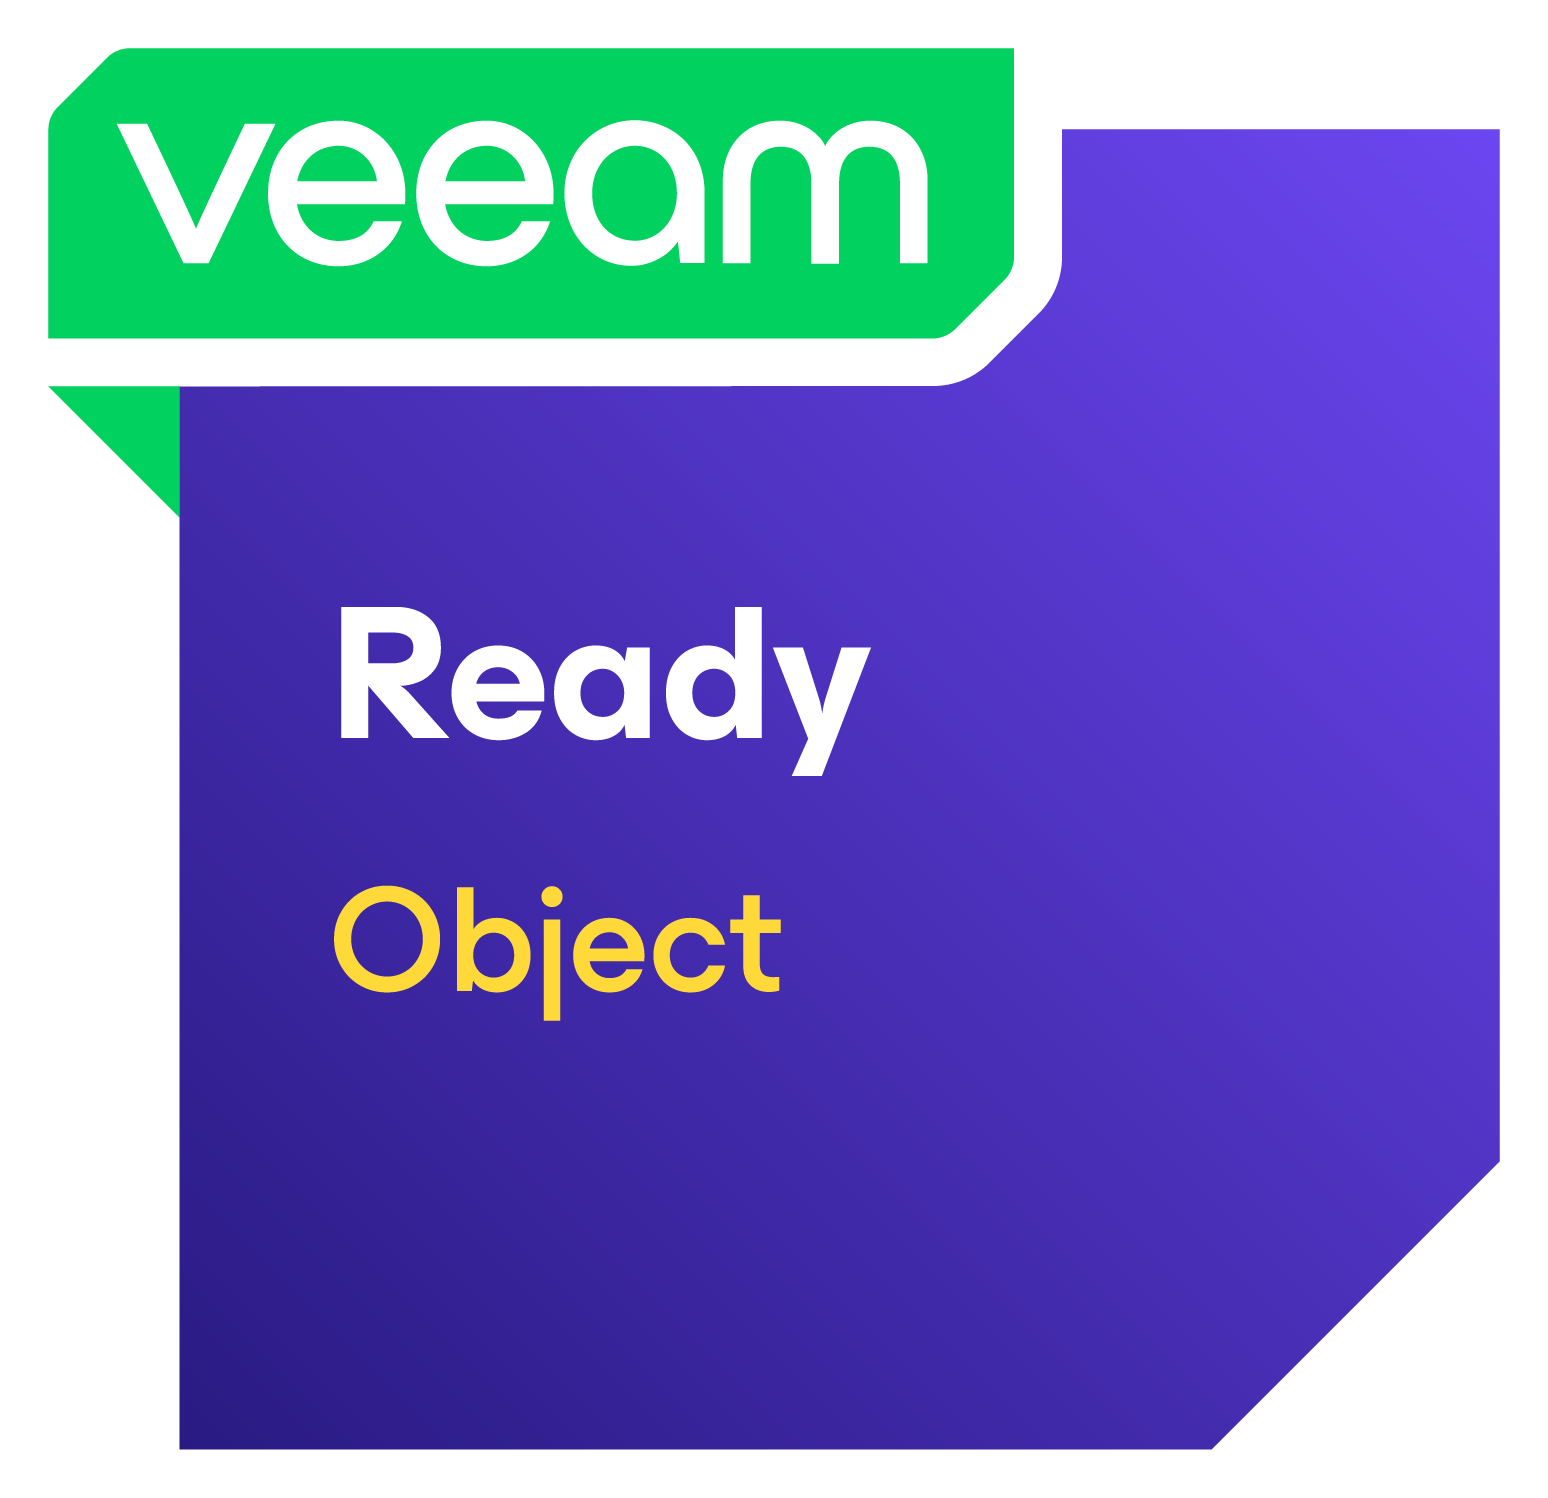 Veeam Ready - Object